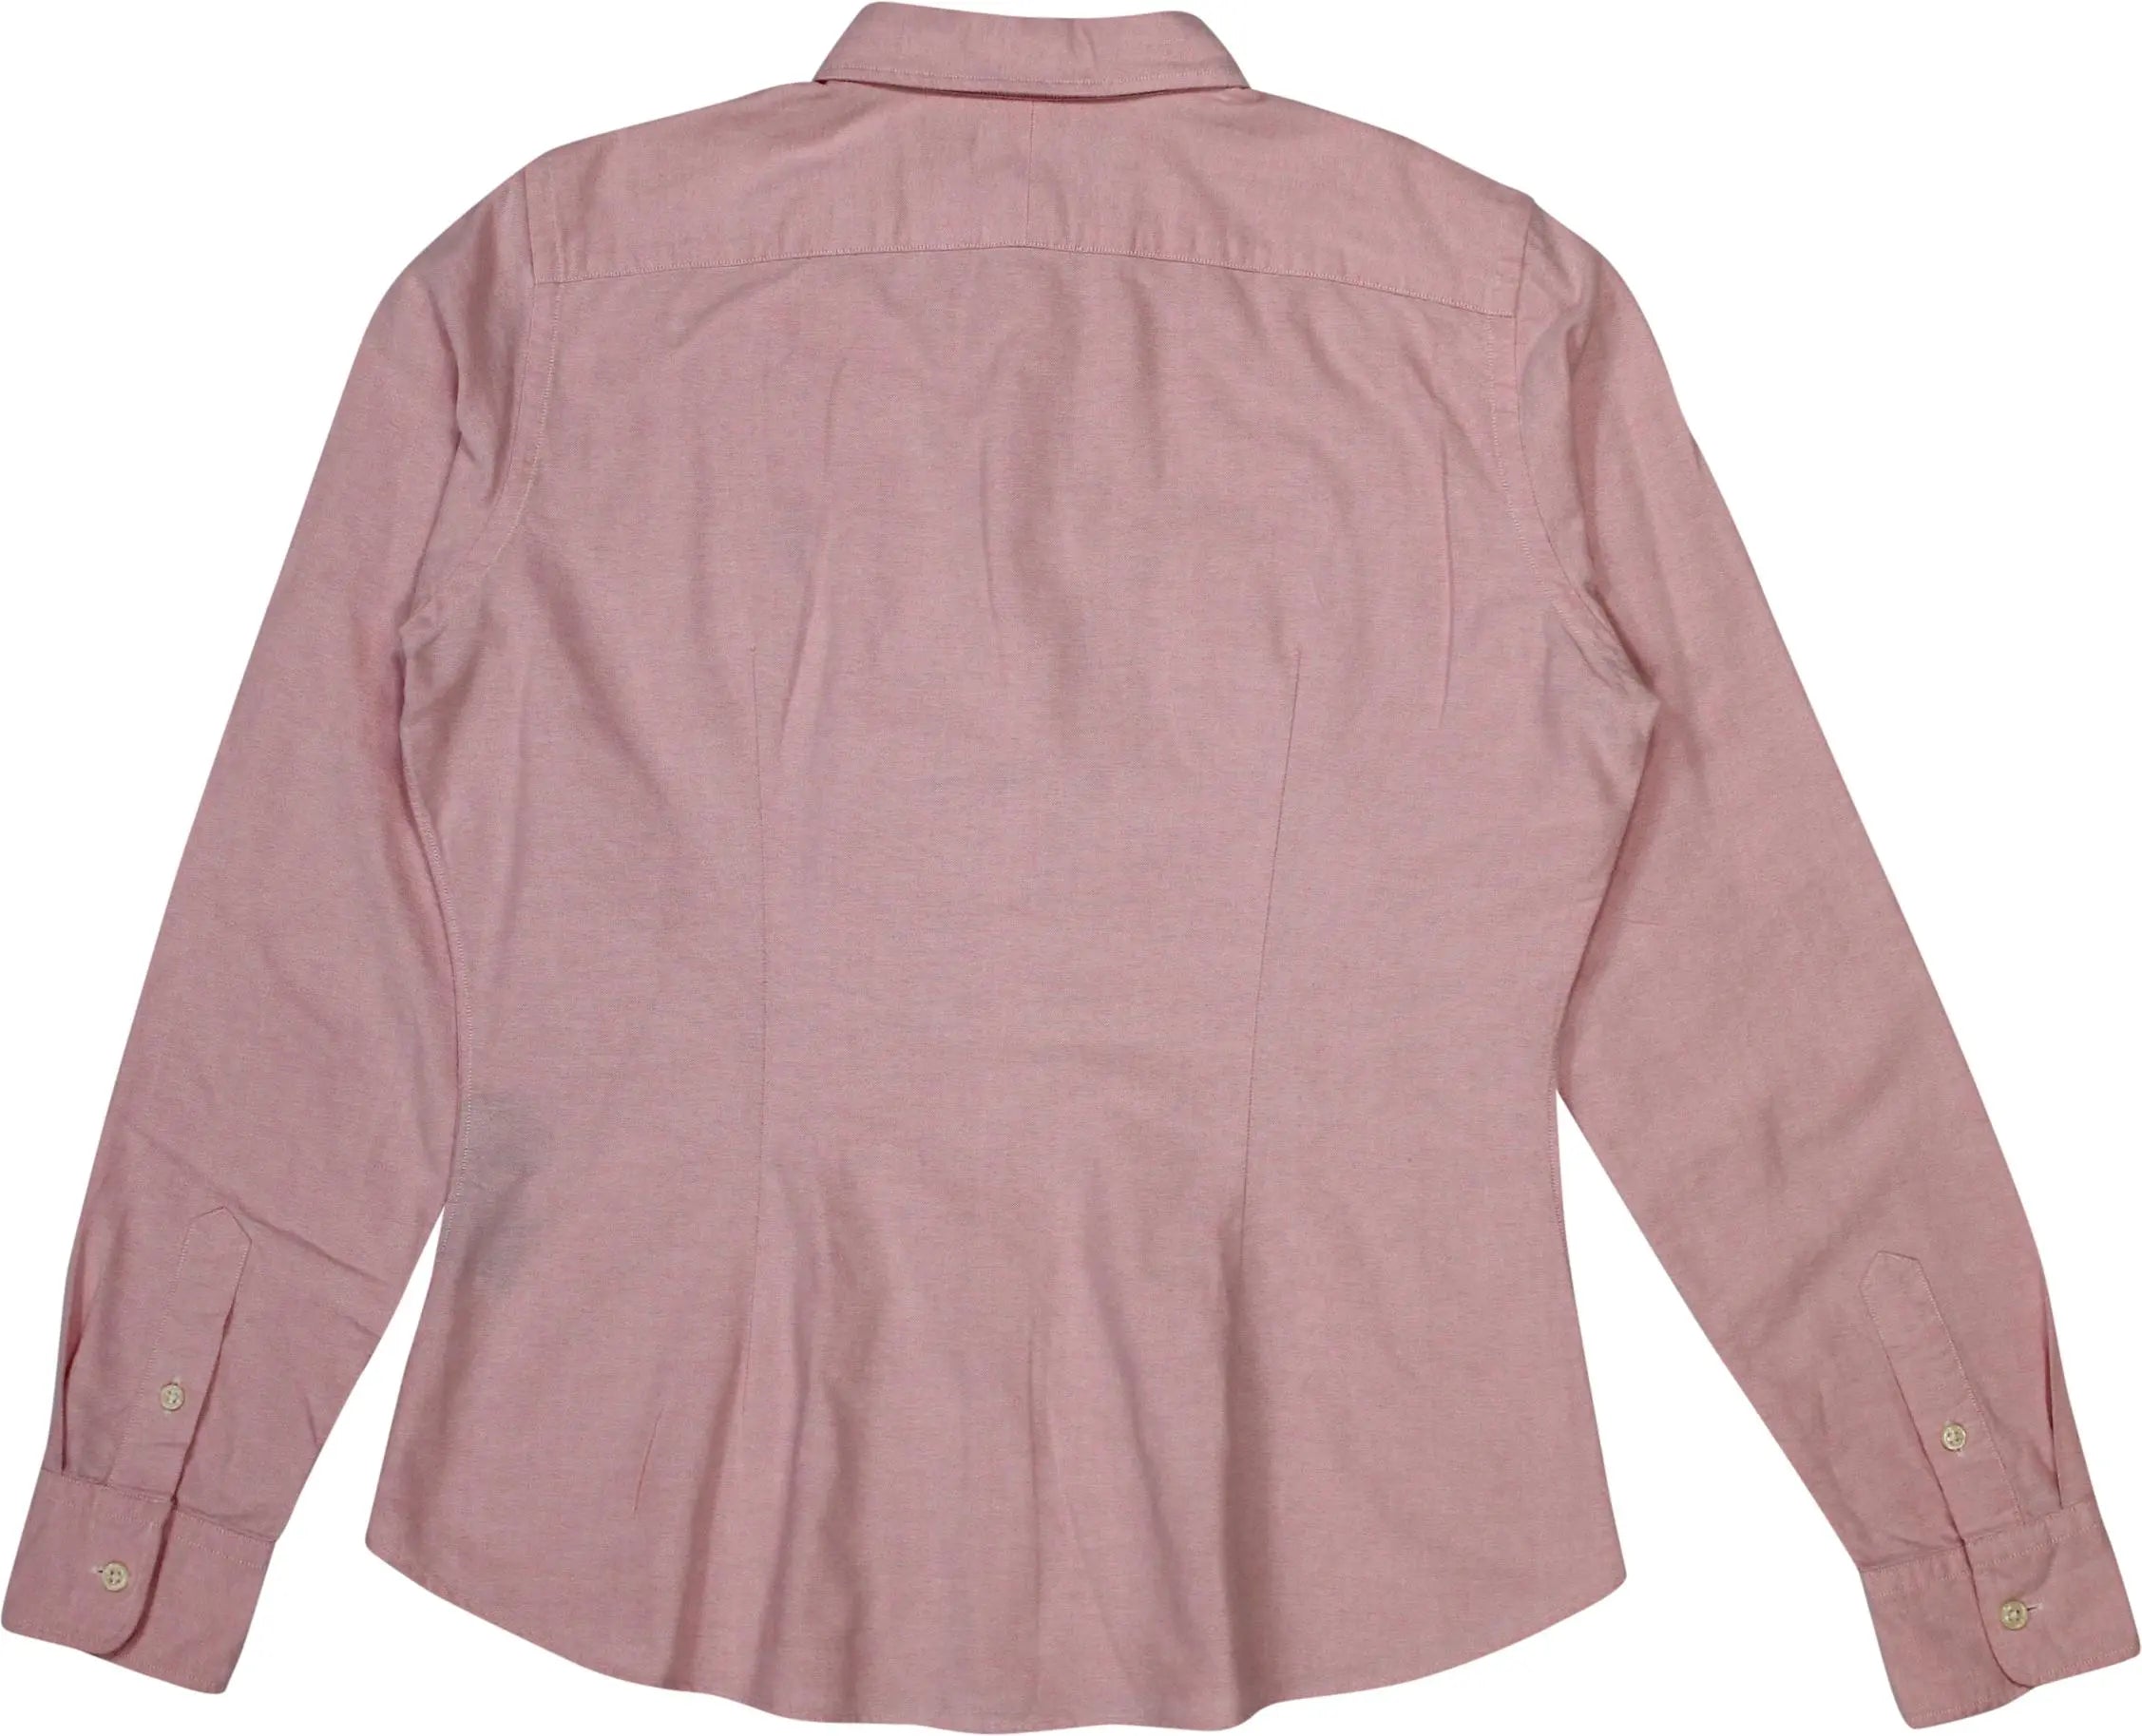 Ralph Lauren - Pink Shirt by Ralph Lauren- ThriftTale.com - Vintage and second handclothing